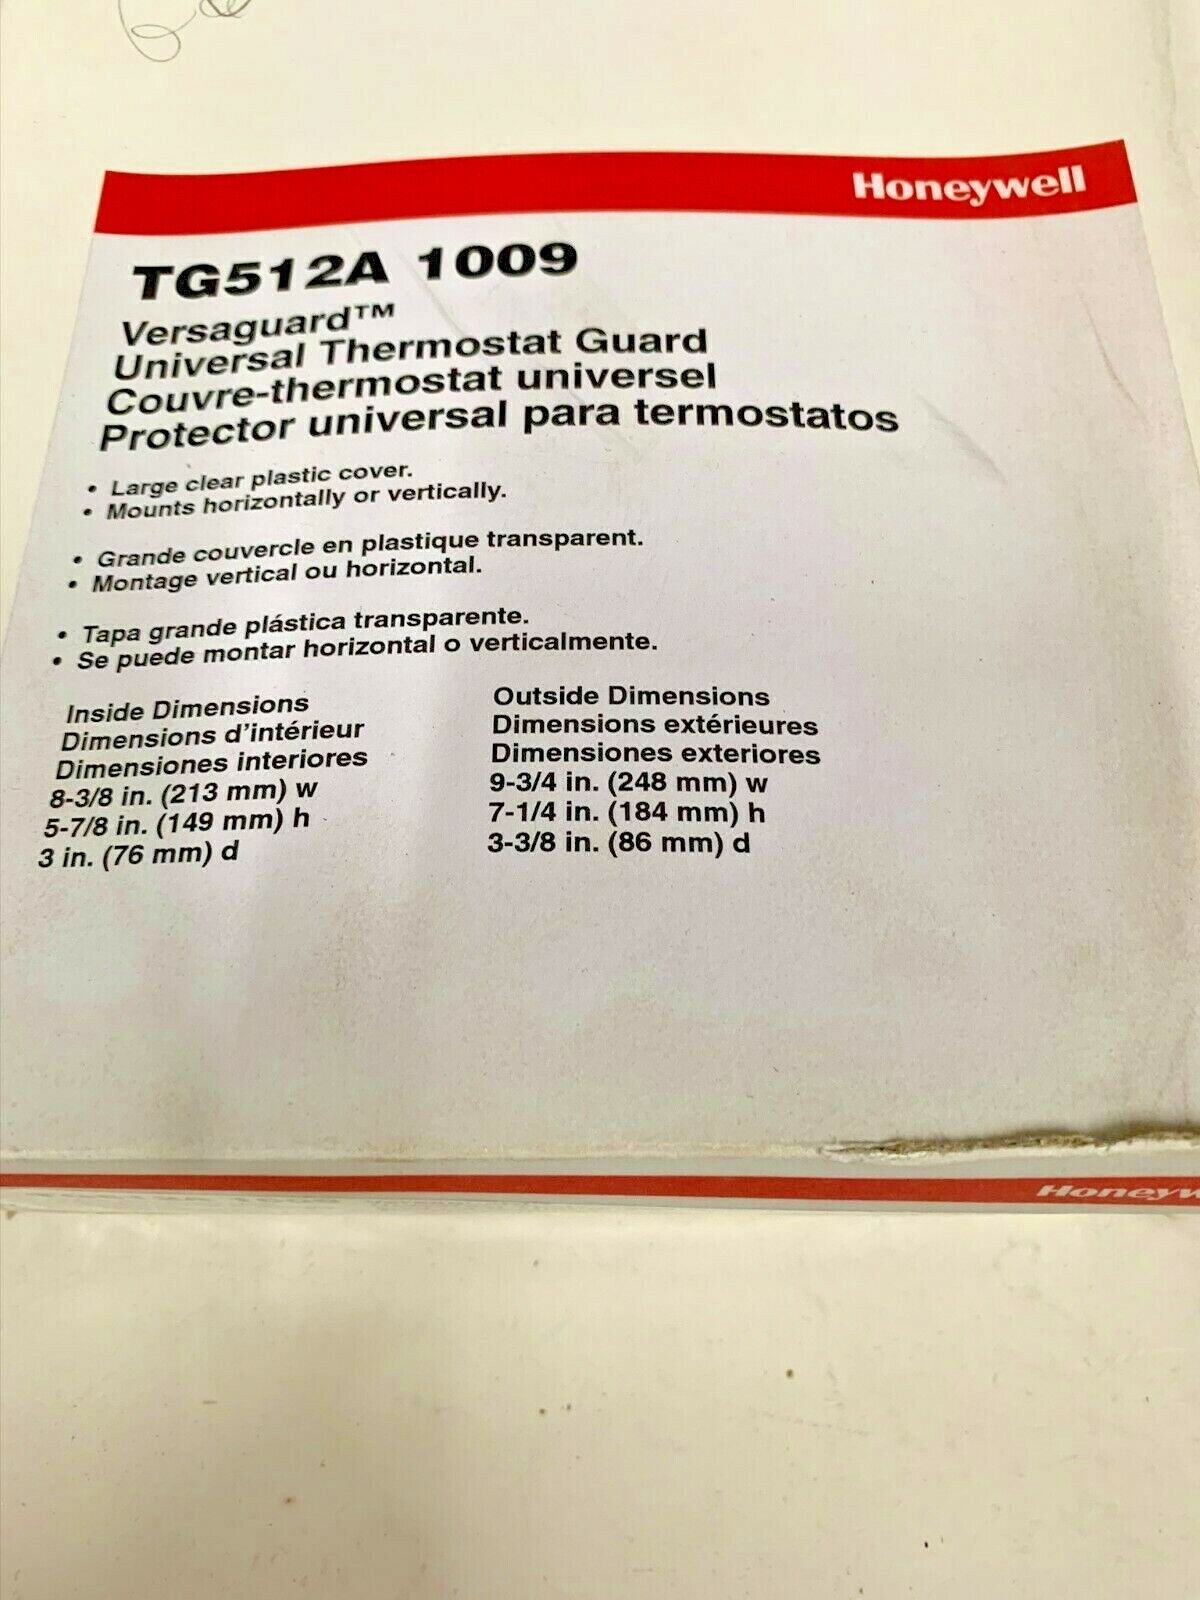 Honeywell TG512A 1009 Versaguard Universal Thermostat Guard